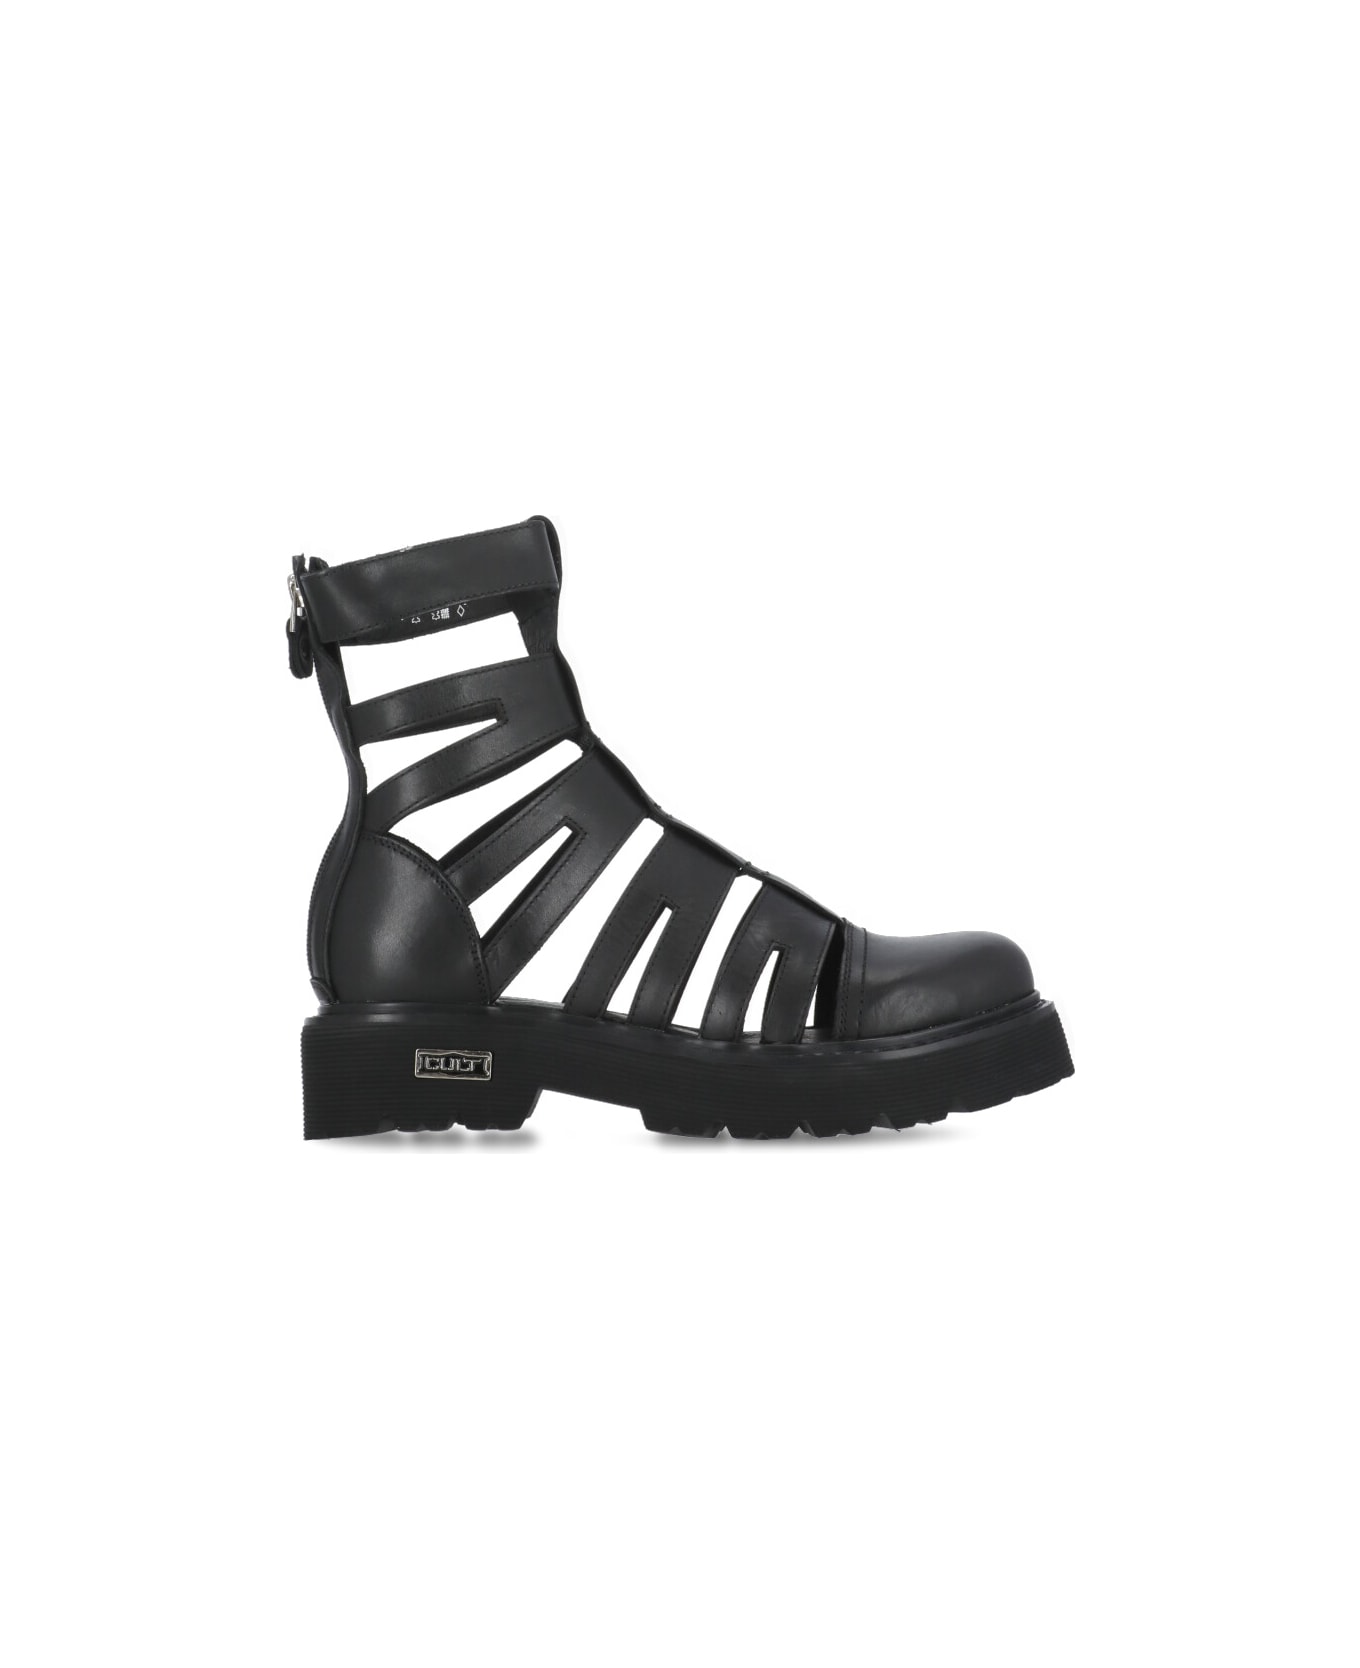 Cult Slash 4209 Boots - Black ブーツ